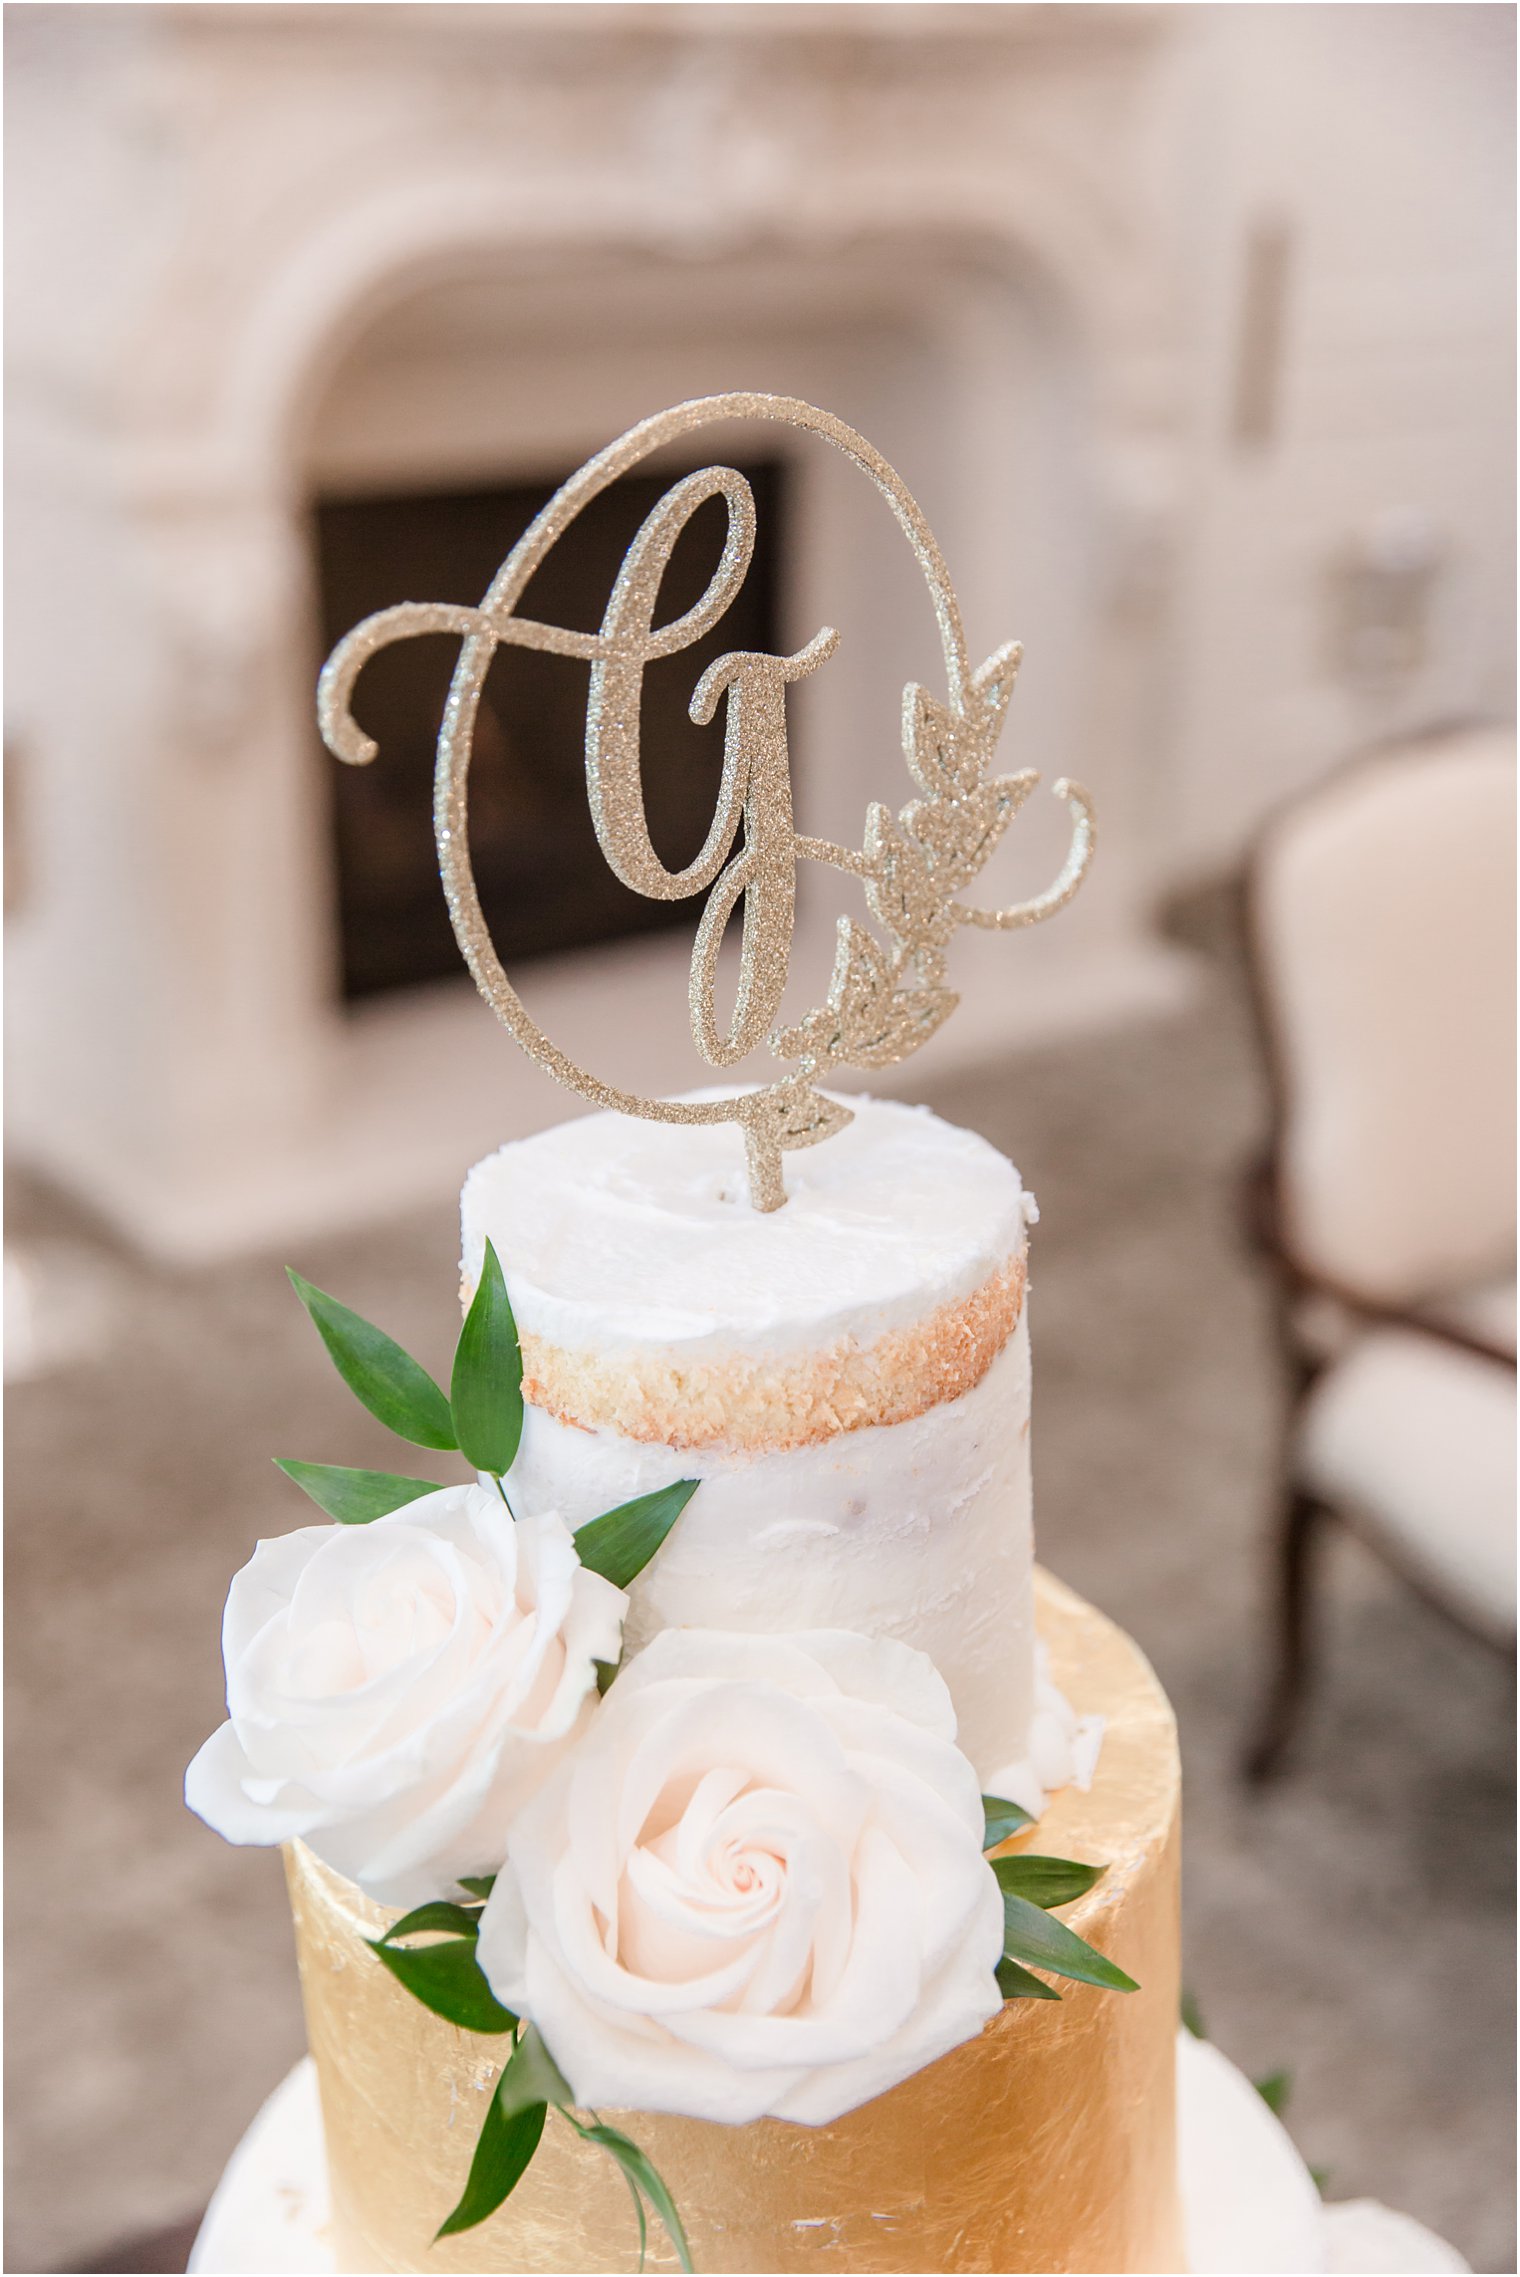 Wedding cake by Bruno's Bakery